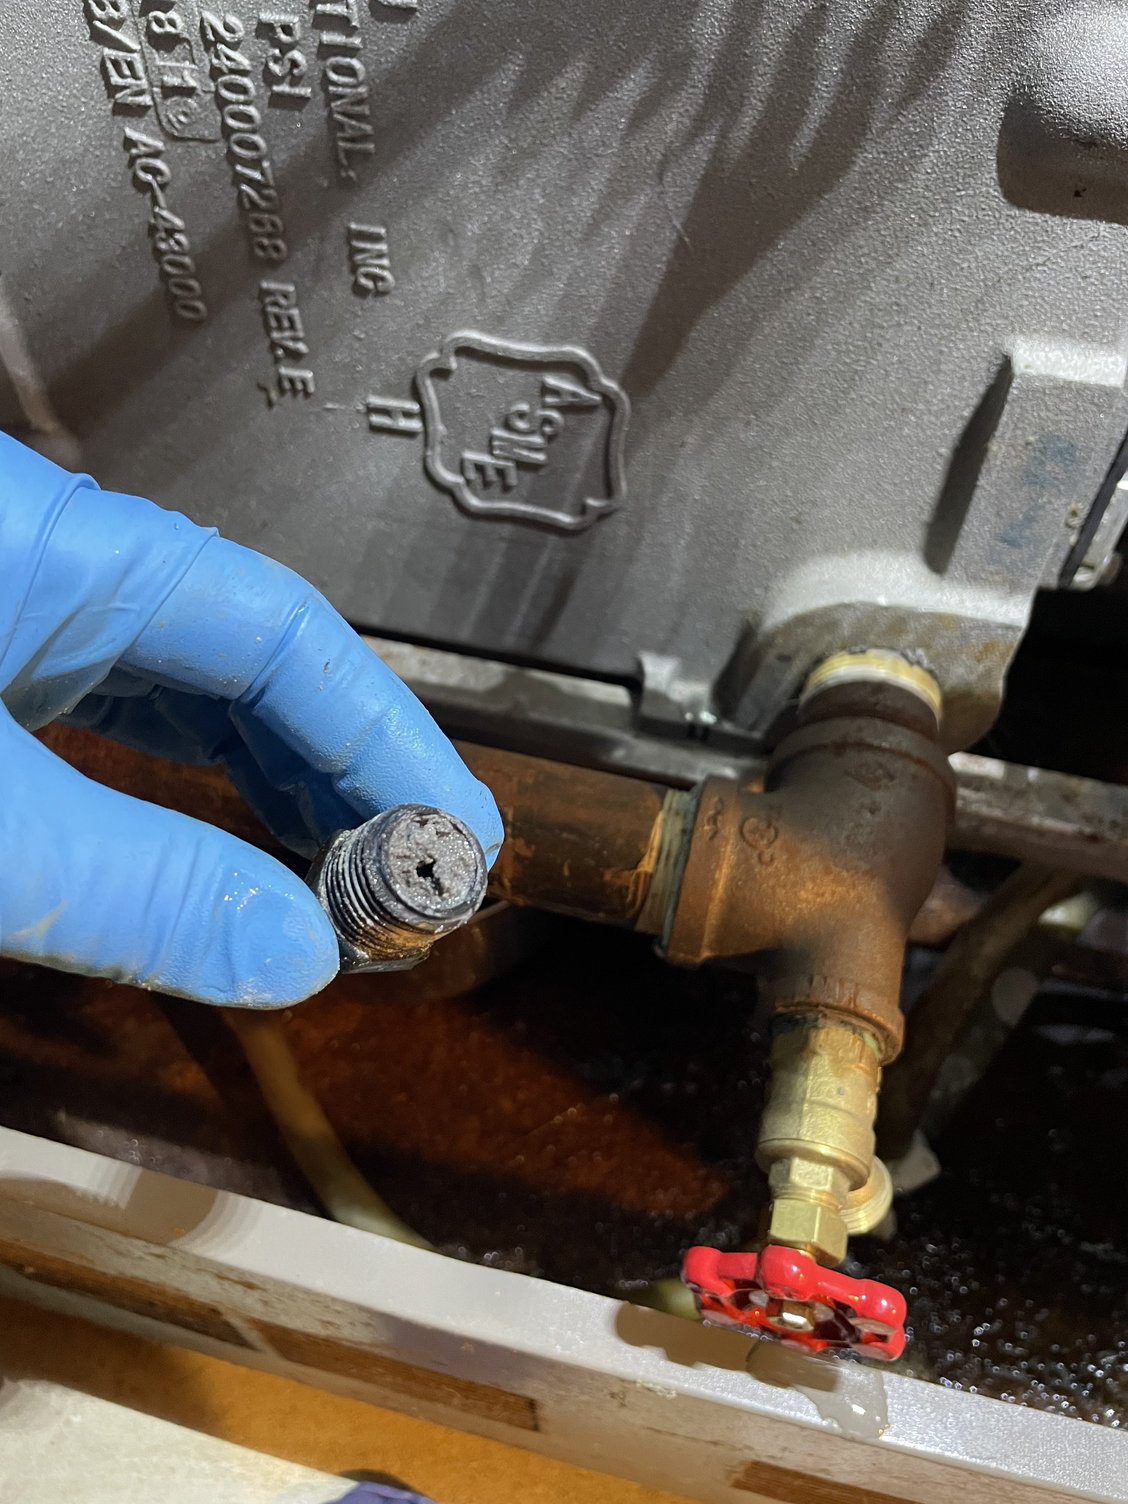 Condensate drain plugged on Lennox boiler - DoItYourself.com Community ...